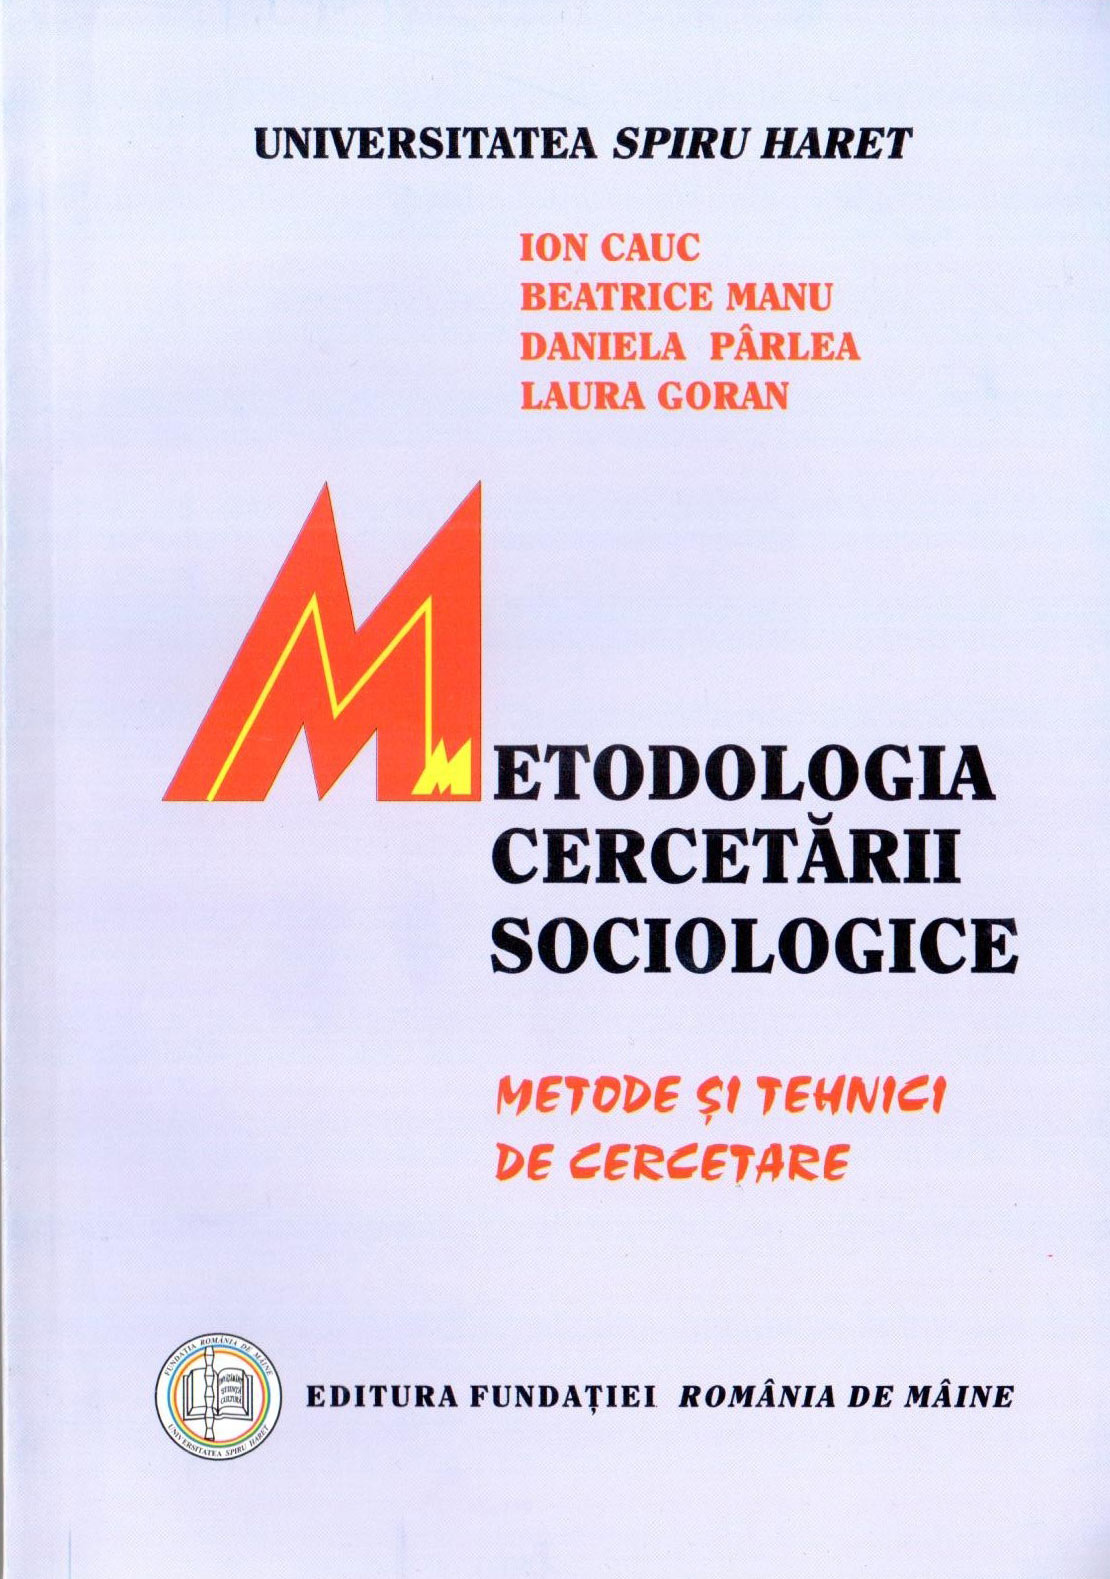 Metodologia cercetarii sociologice | Ion Cauc, Beatrice manu, Daniela Parlea, Laura Goran